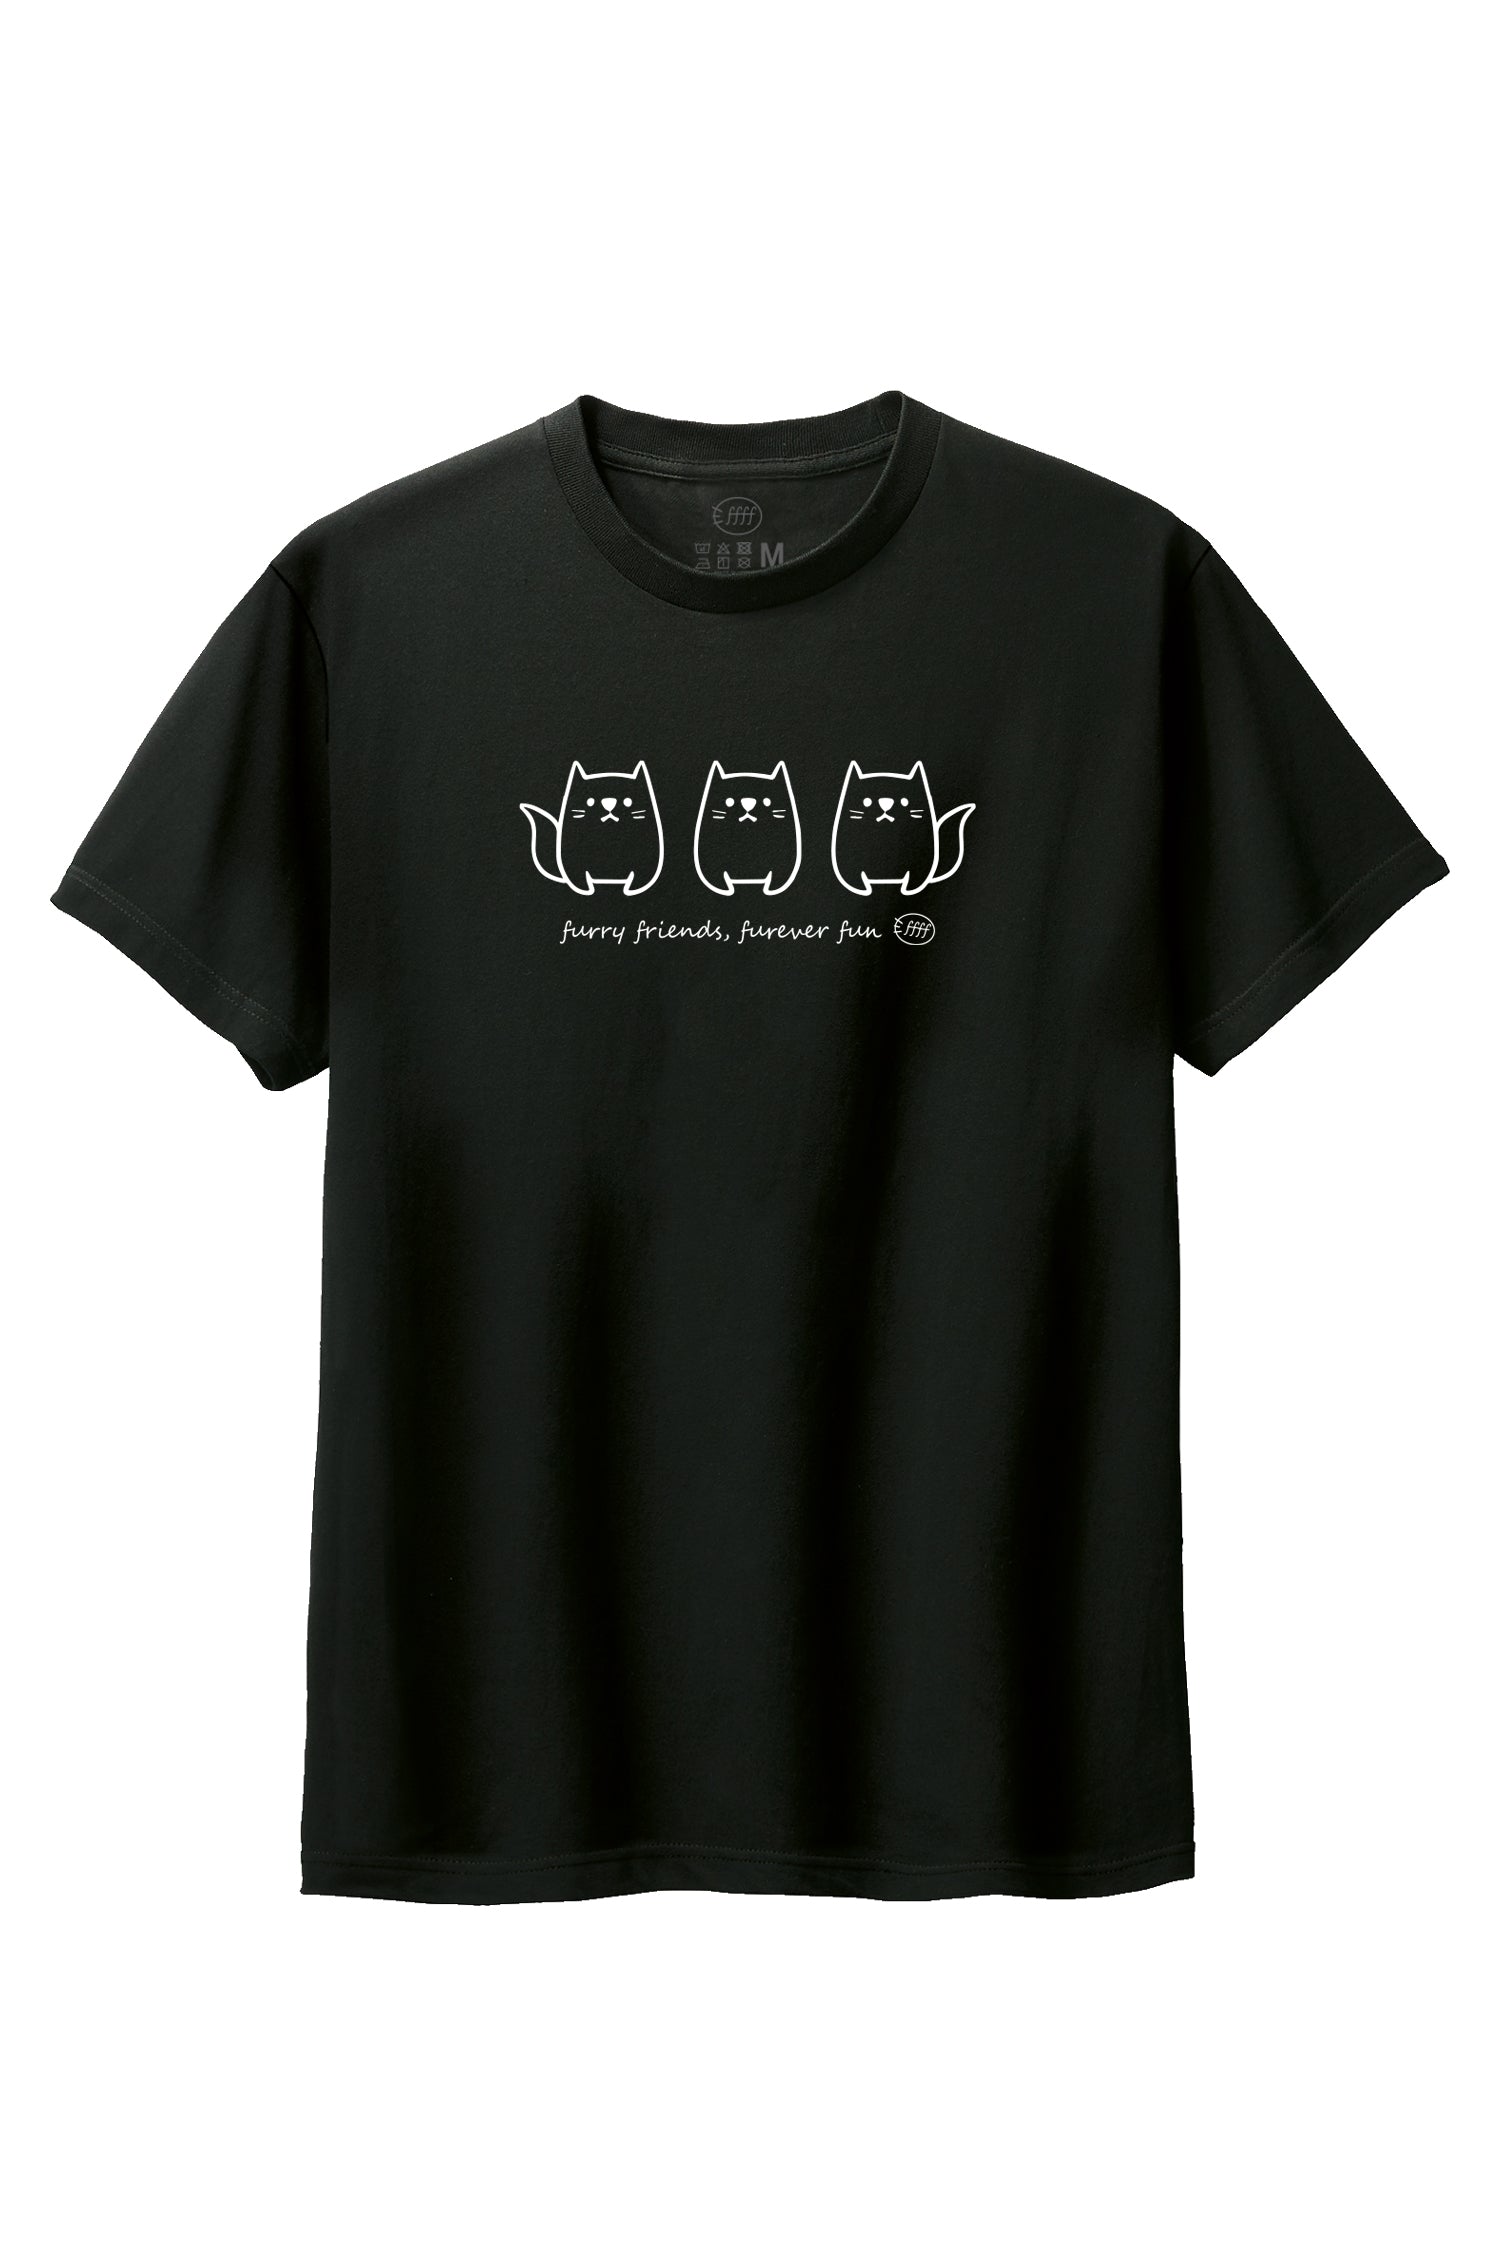 ffff】可愛い♪3匹の猫たちが並ぶ！/ラインアートのモノクロTシャツ